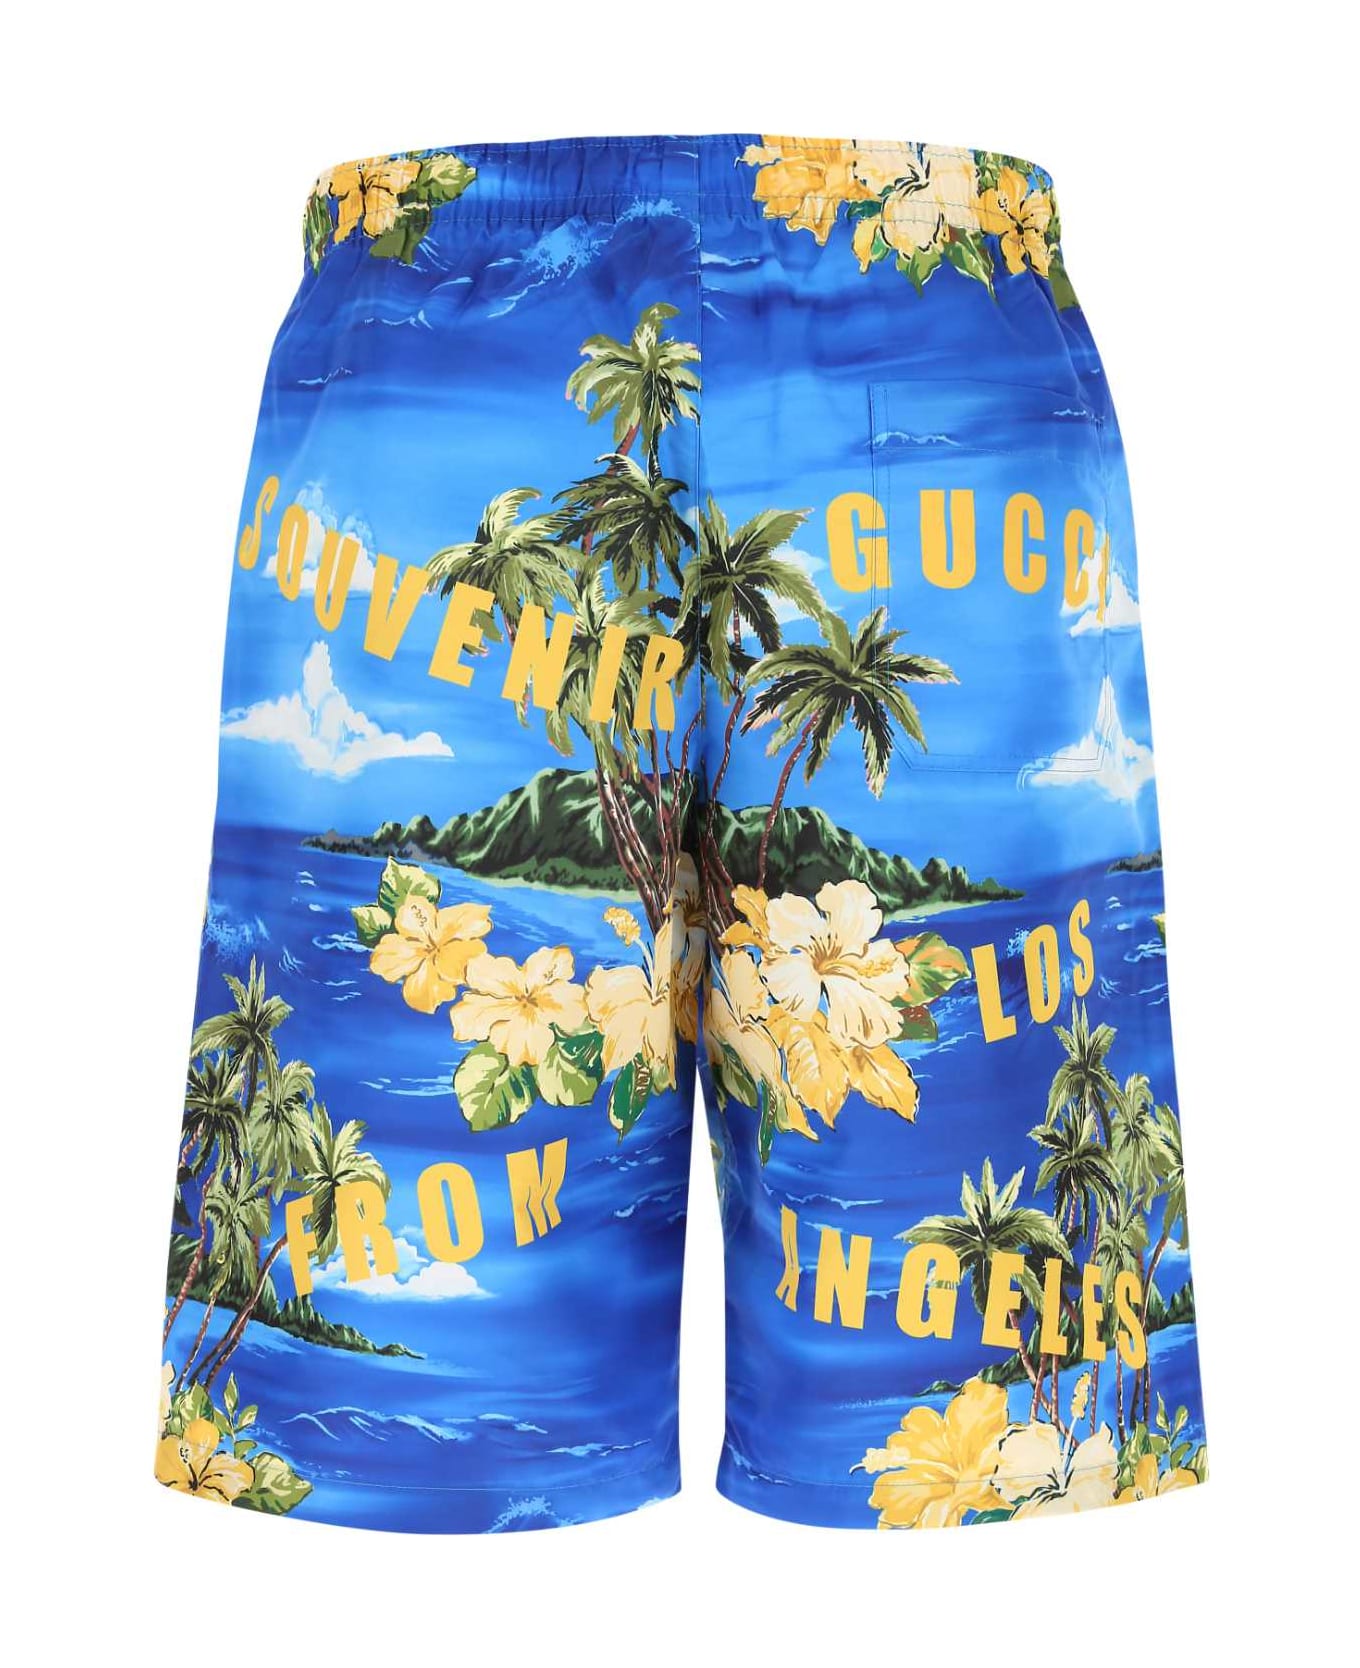 Gucci Printed Polyester Swimming Shorts - 4464 水着